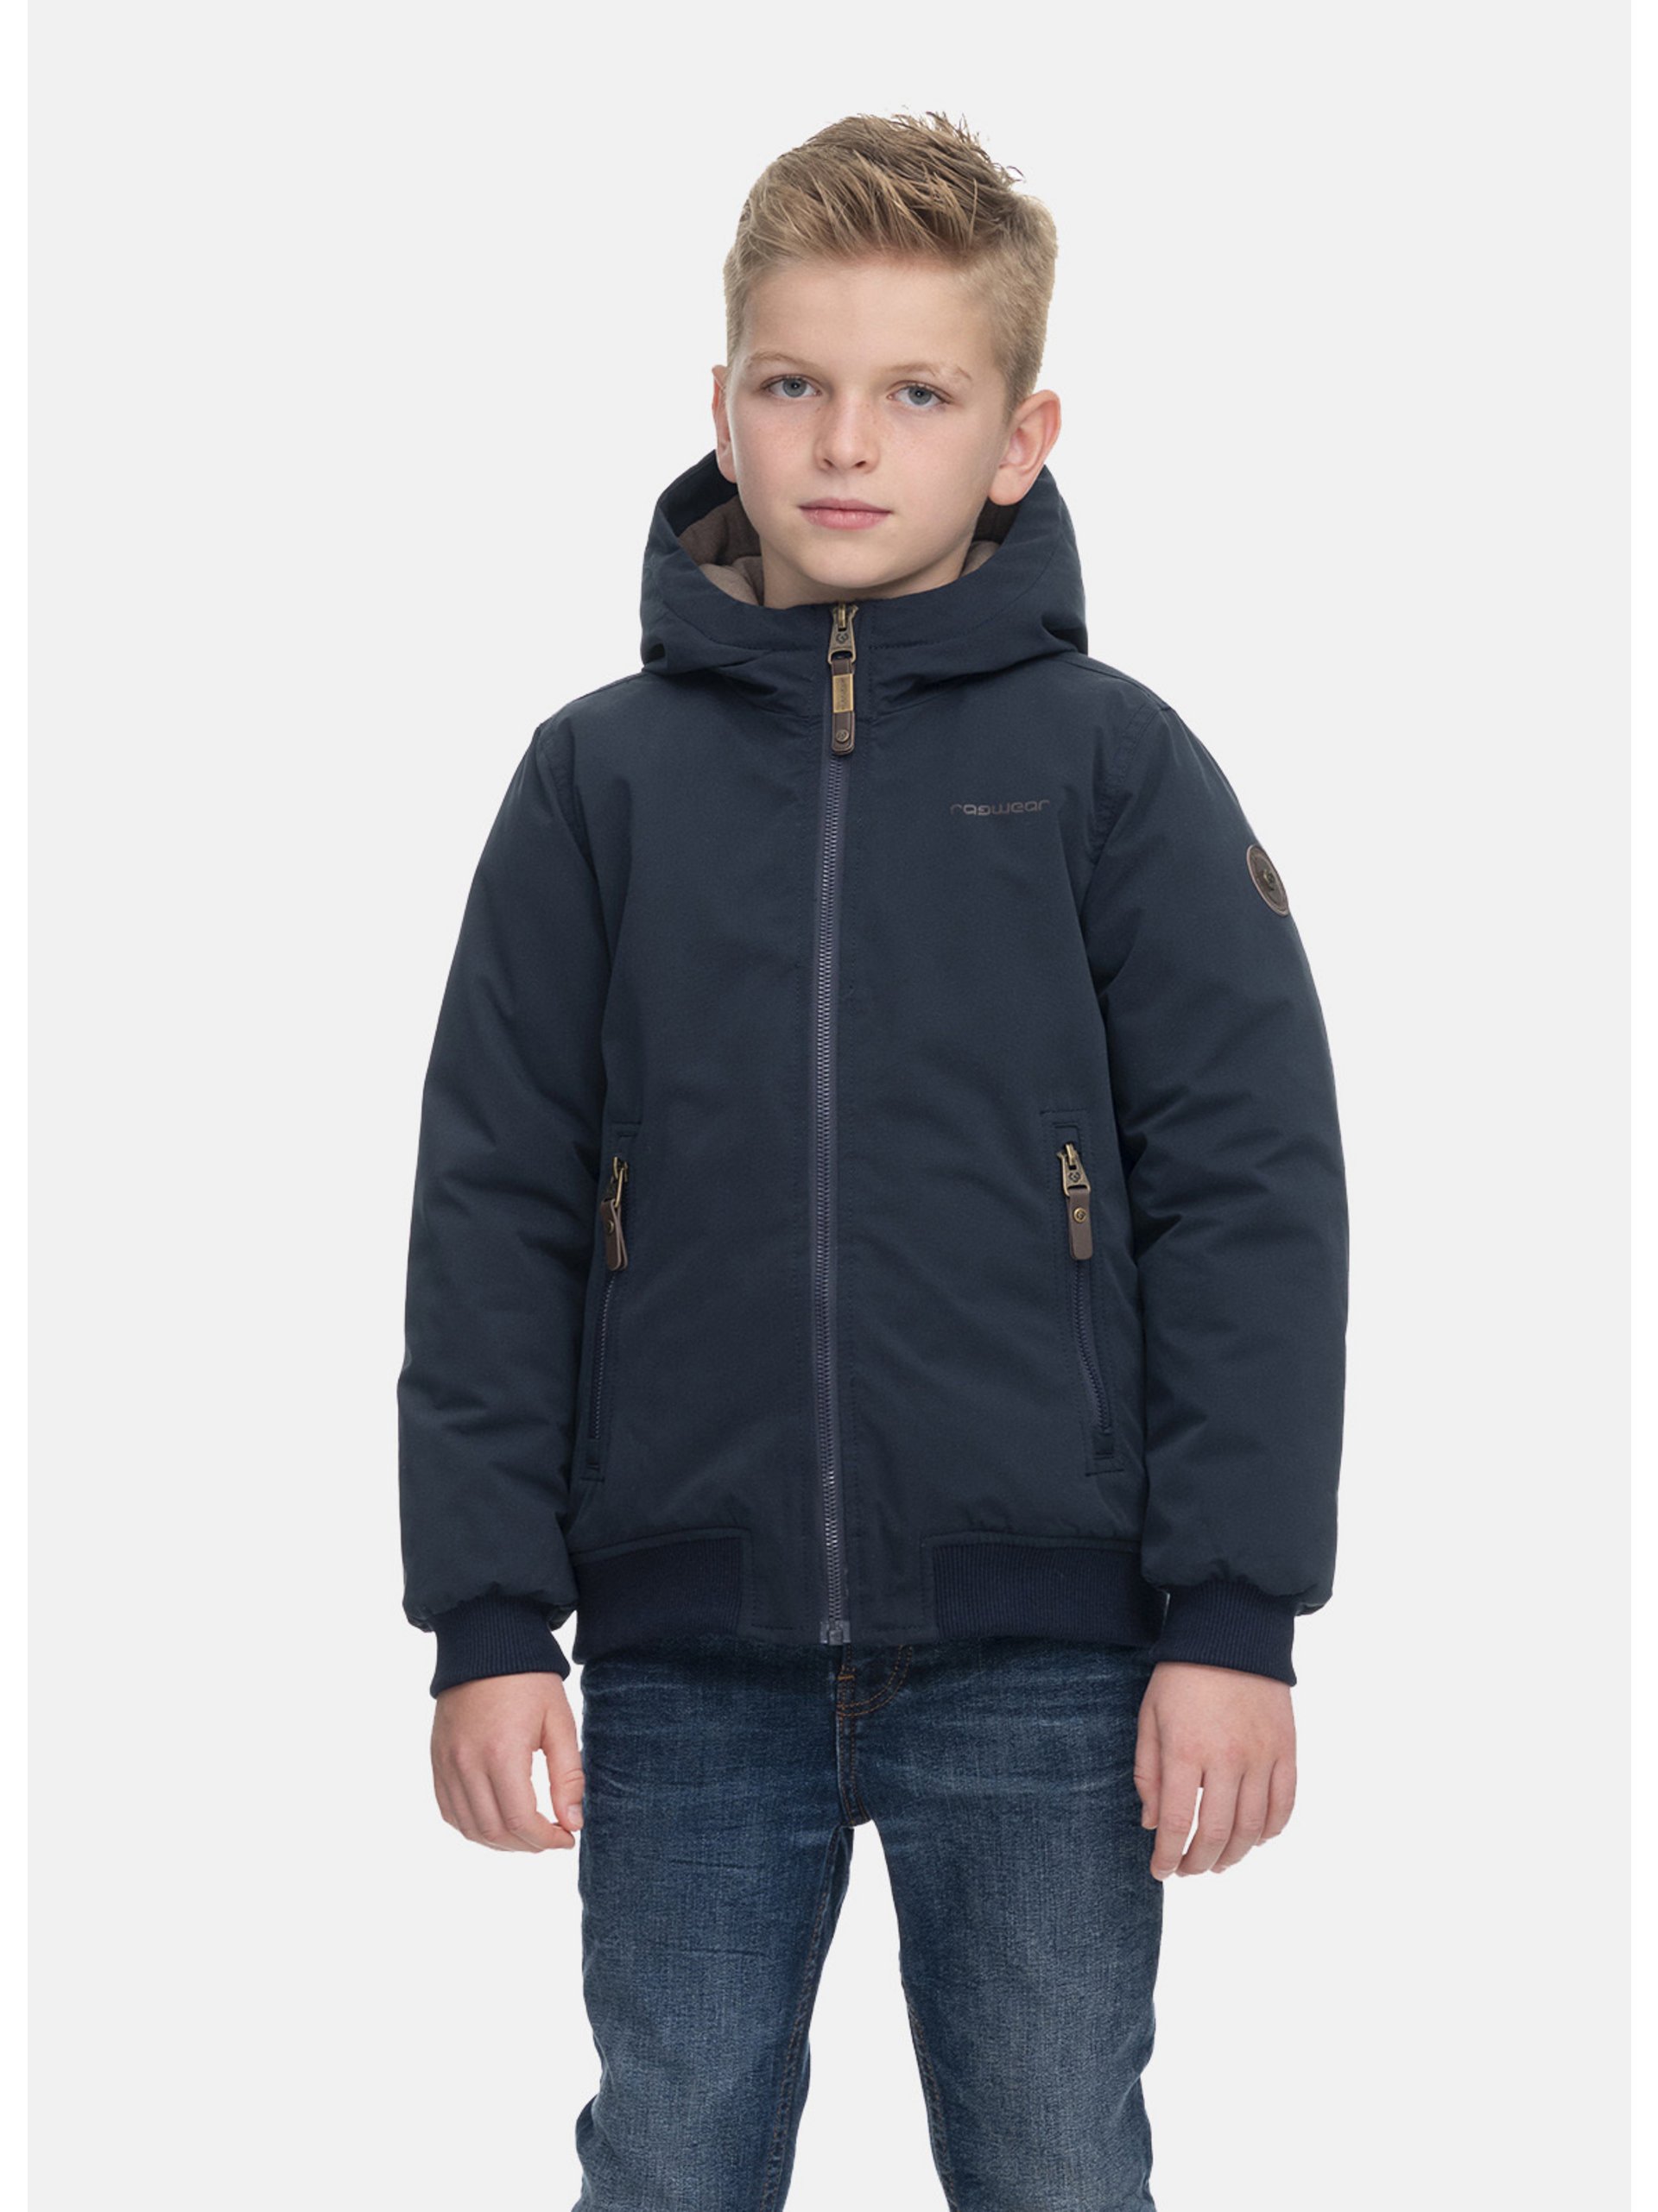 Winterjacke Maddew Jungen Ragwear online kaufen -